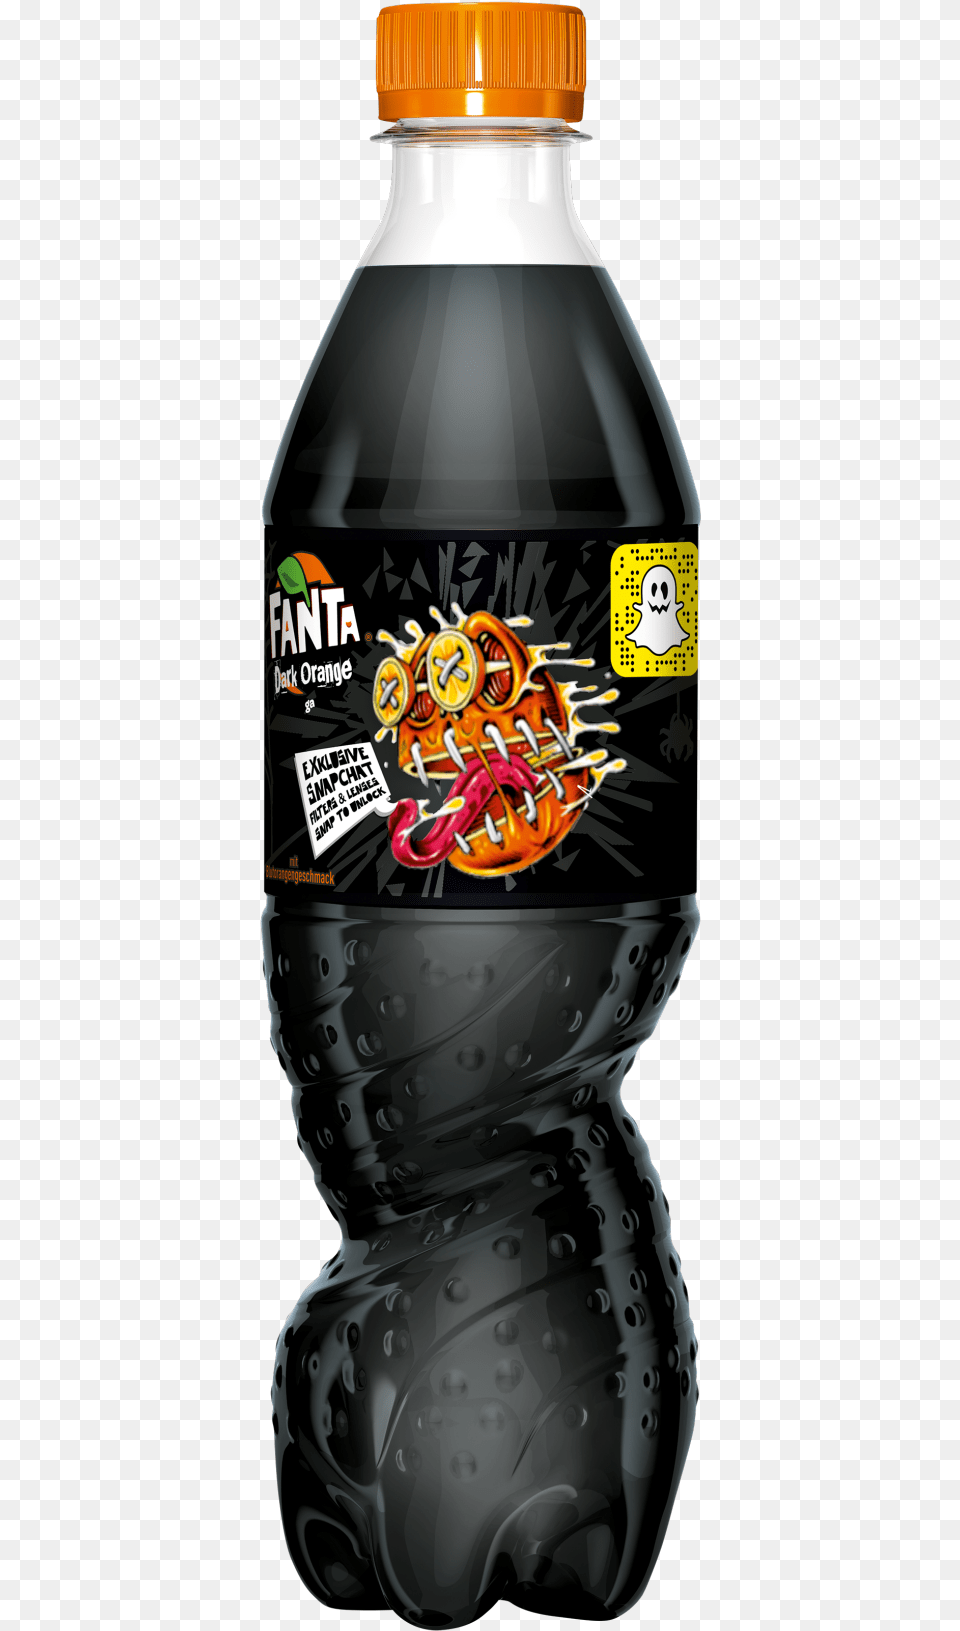 Fanta Dark Orange Fanta Black Blood Orange, Bottle, Beverage, Soda, Coke Png Image